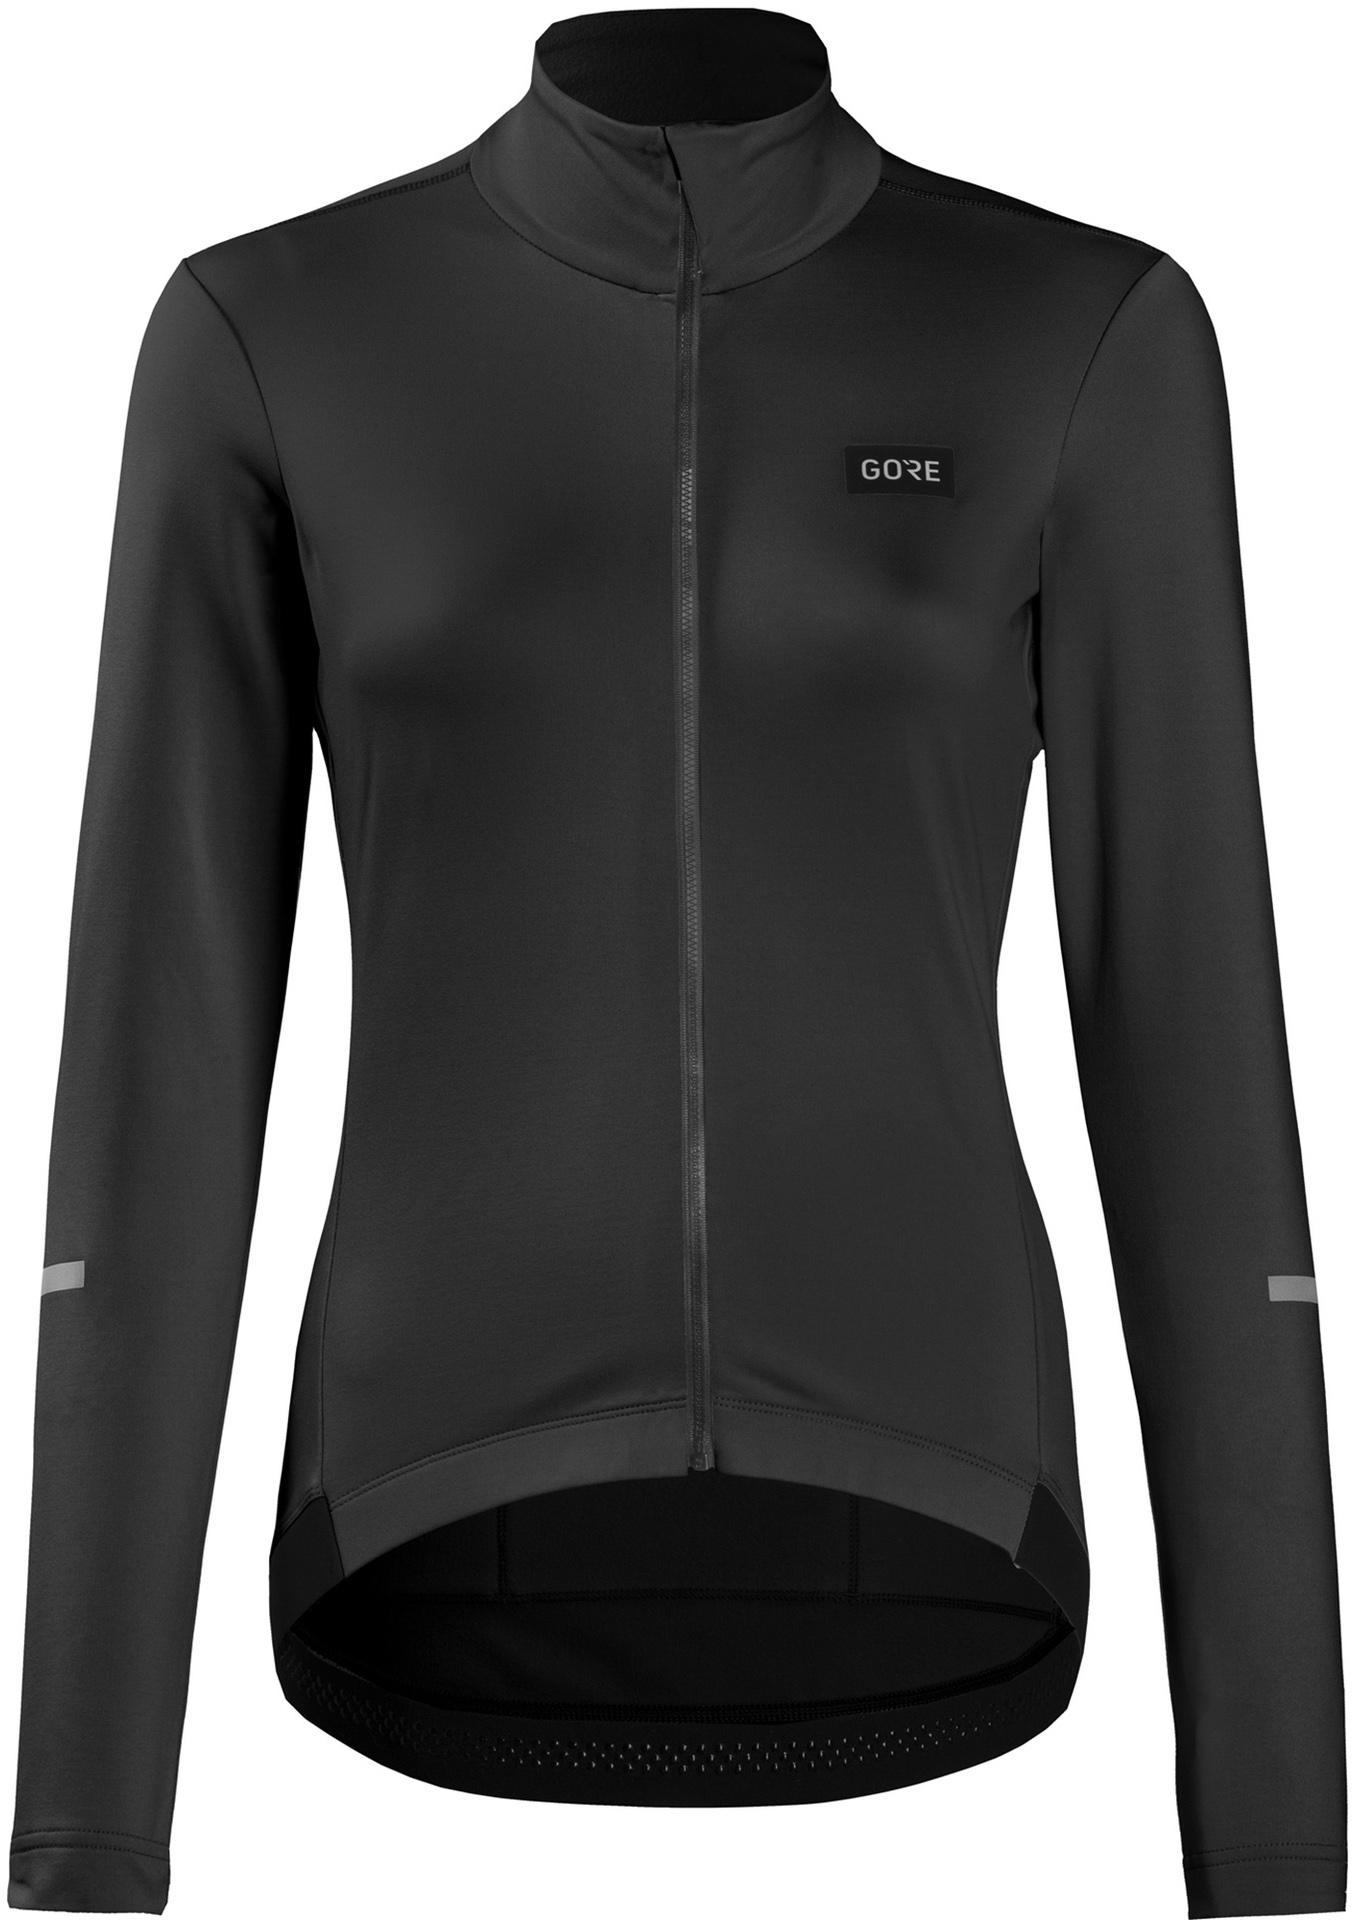 Gorewear Womens Progress Cycling Jersey - Black